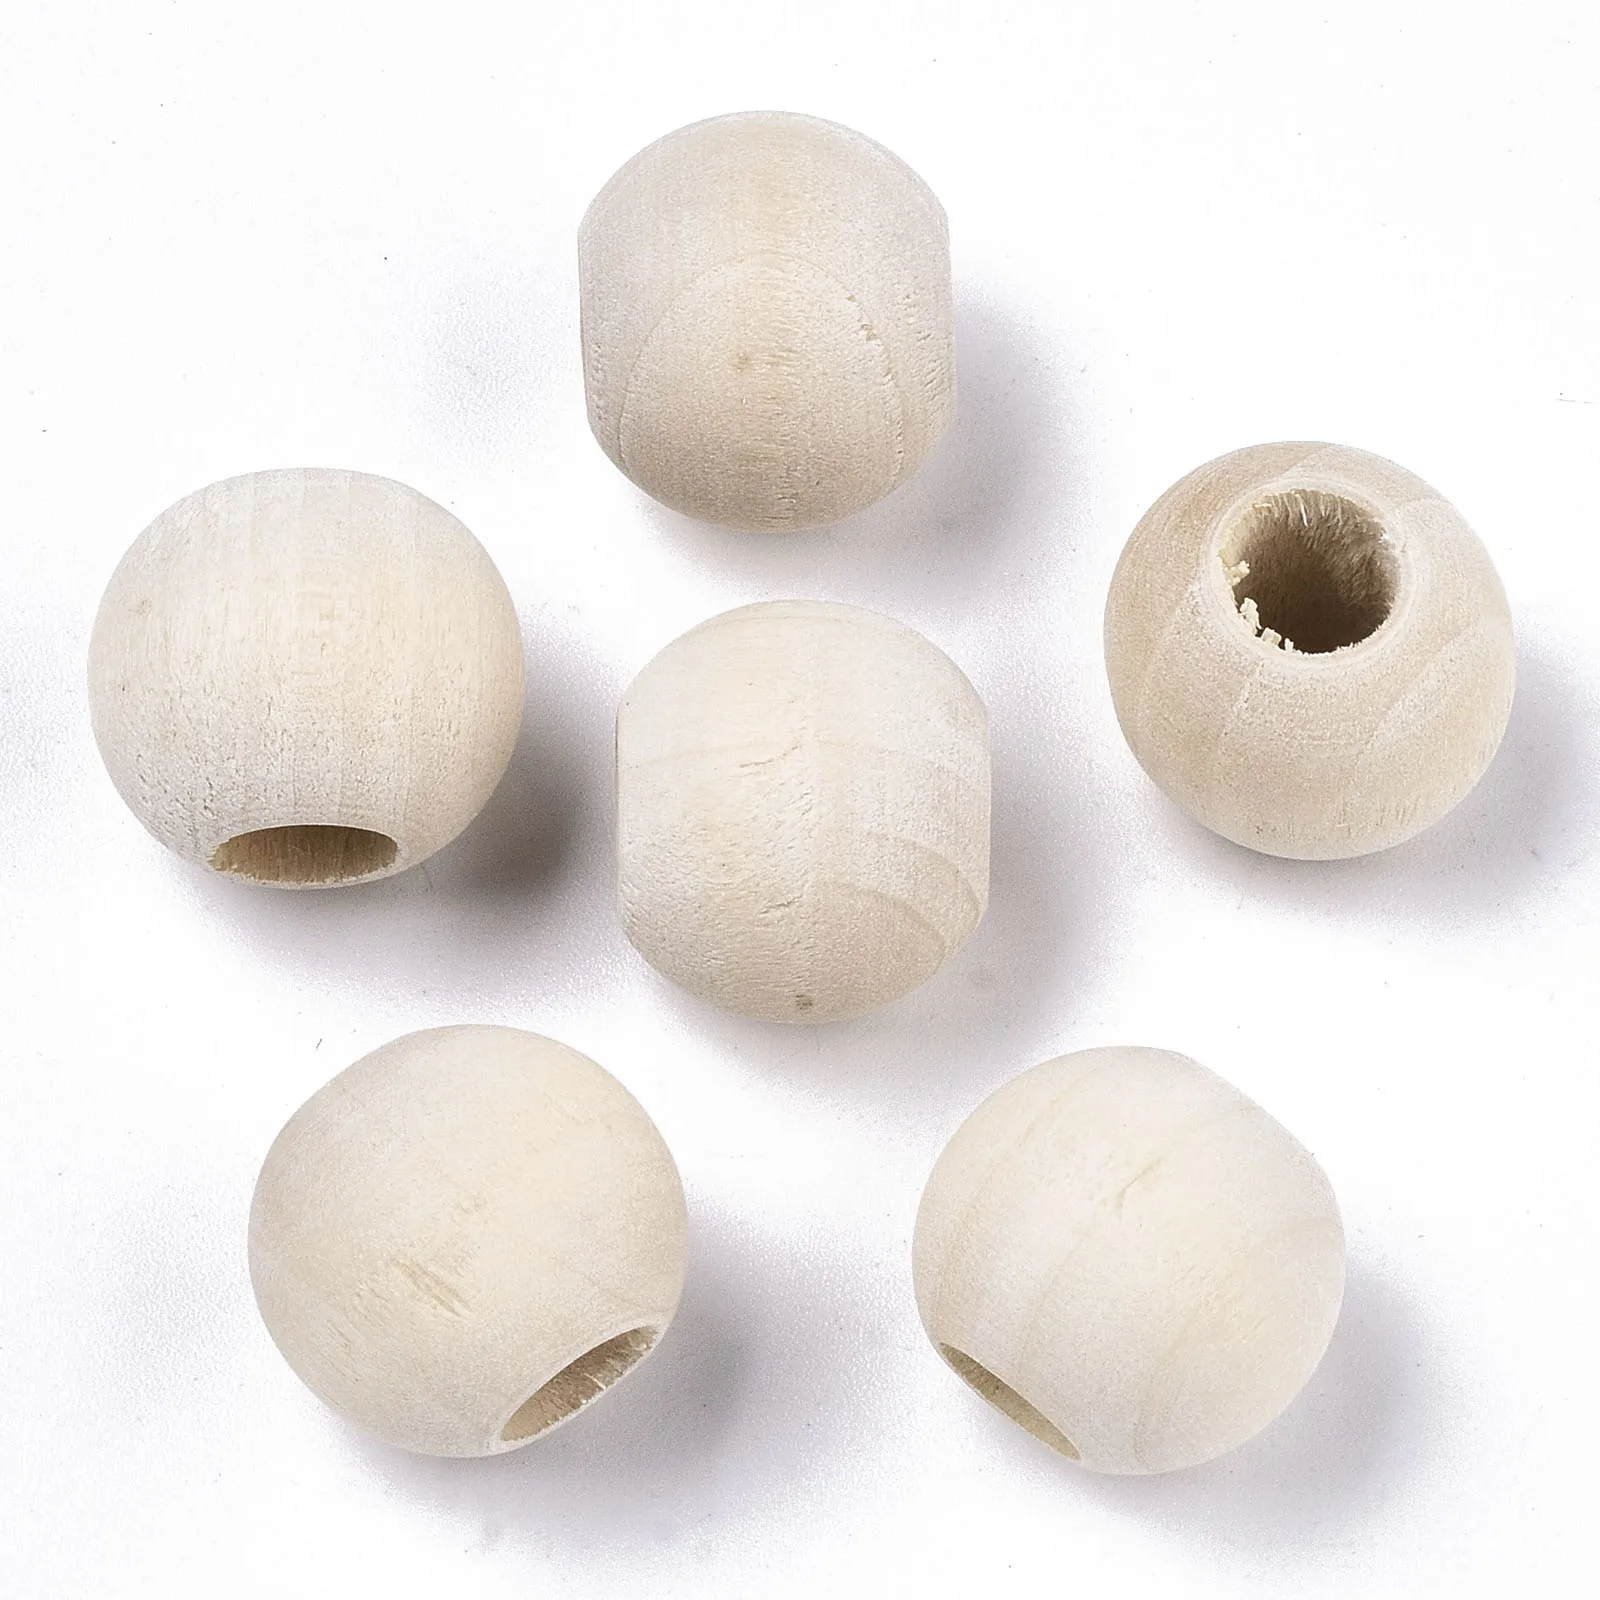 

PandaHall 15mm Natural Unfinished Macrame Wood Beads